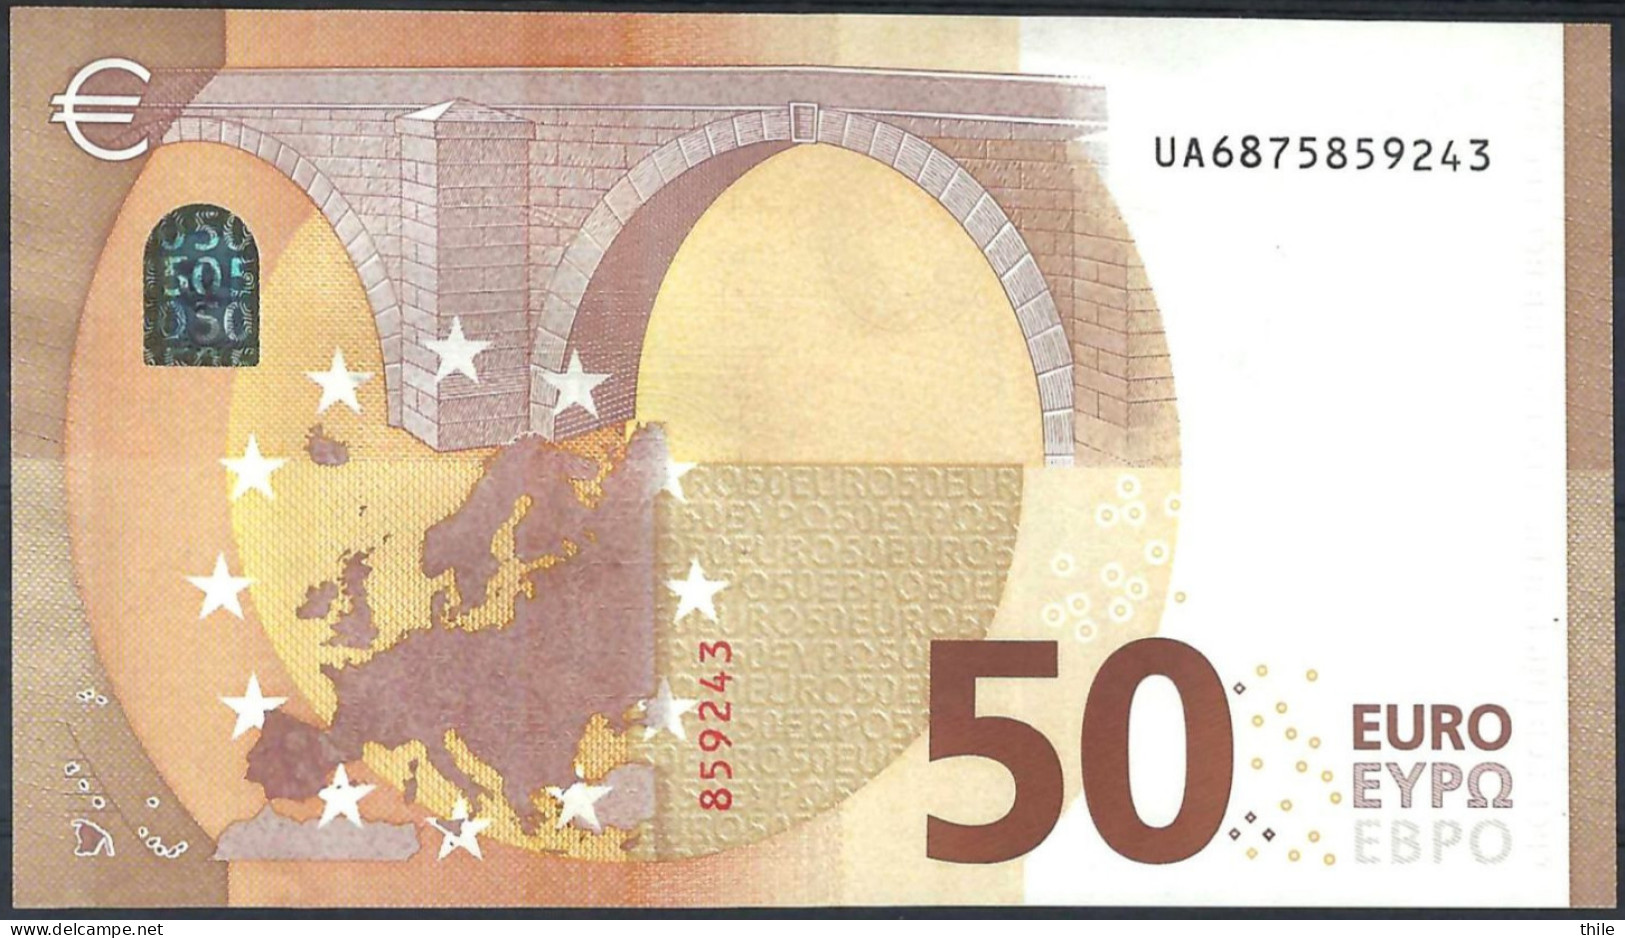 FRANCE - 50 € - UA - U038 G1 - UNC - Lagarde - 50 Euro